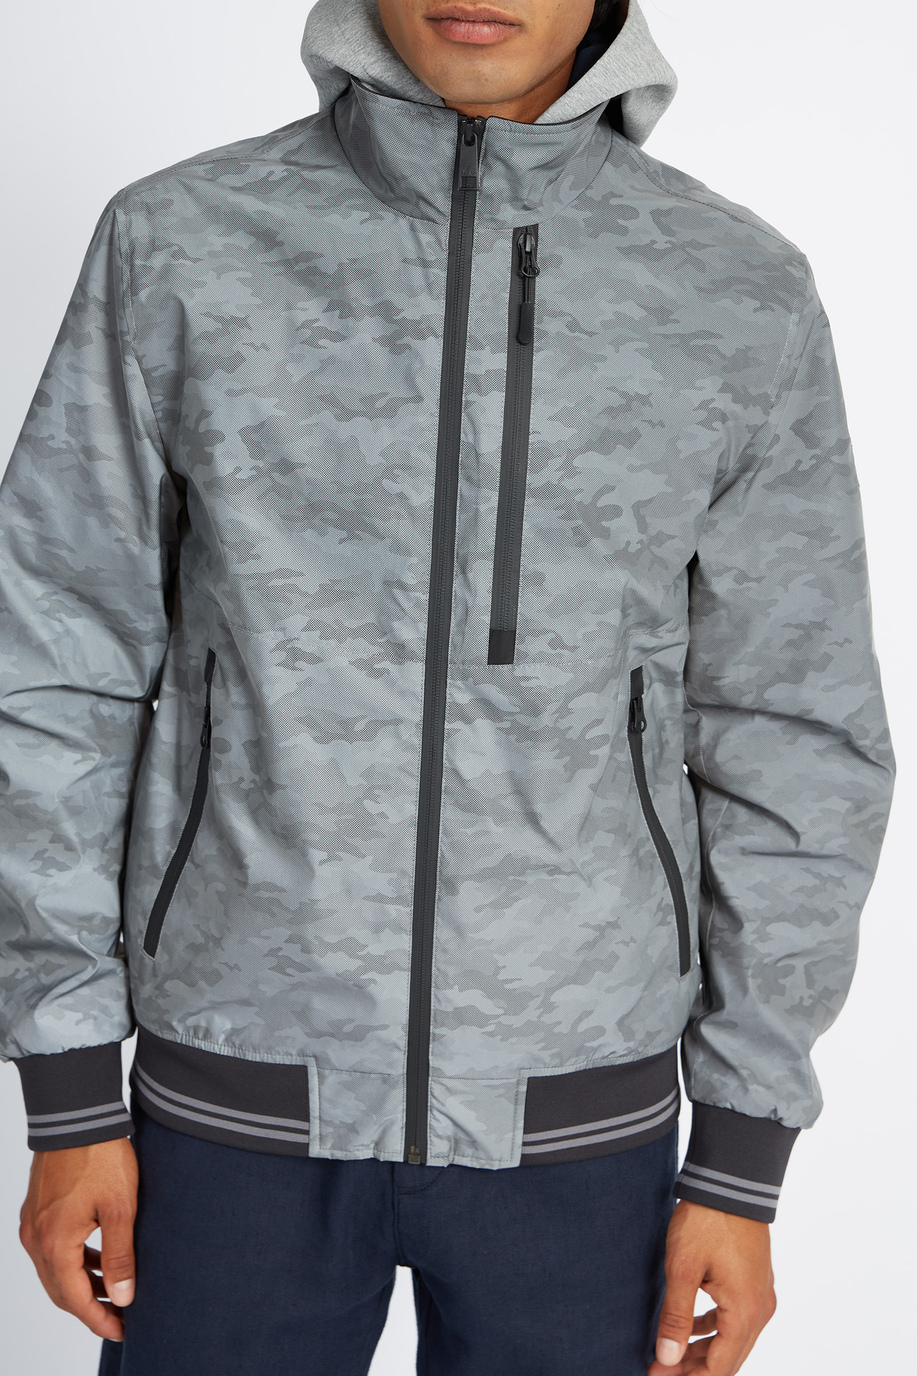 Giacca uomo full zip cappuccio camouflage Logos - Varick - I nostri preferiti per lui | La Martina - Official Online Shop